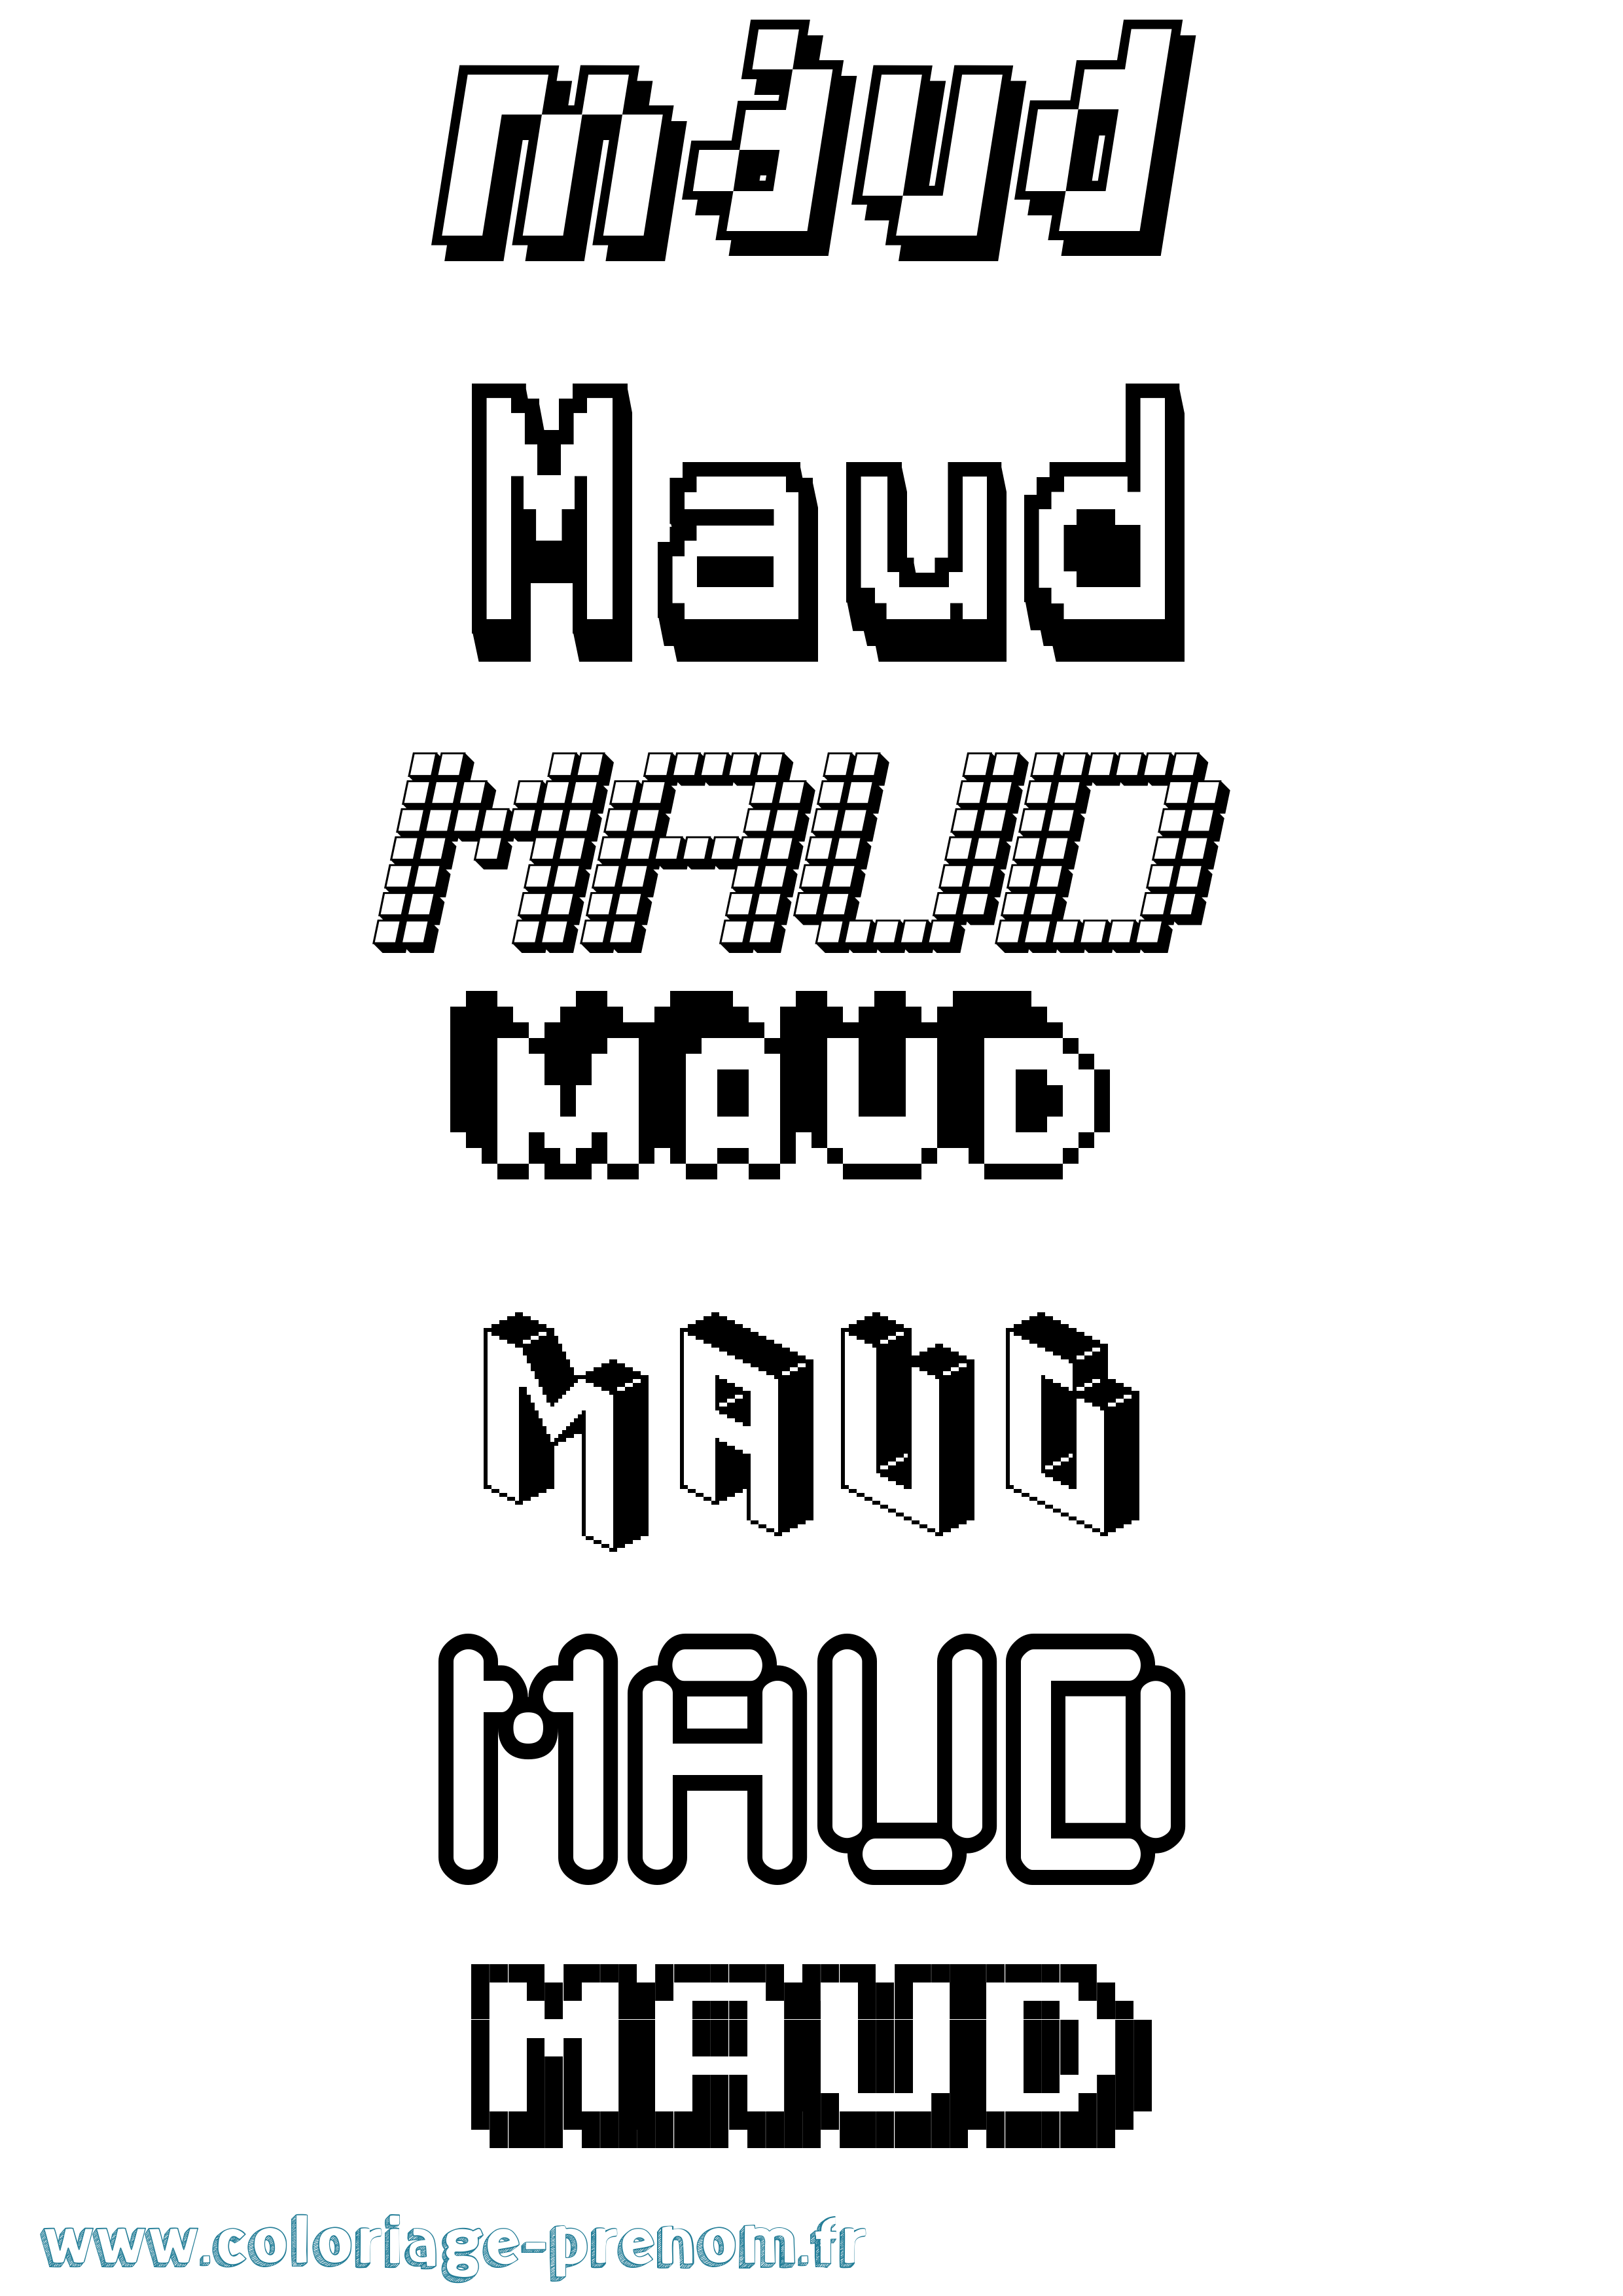 Coloriage prénom Maud Pixel